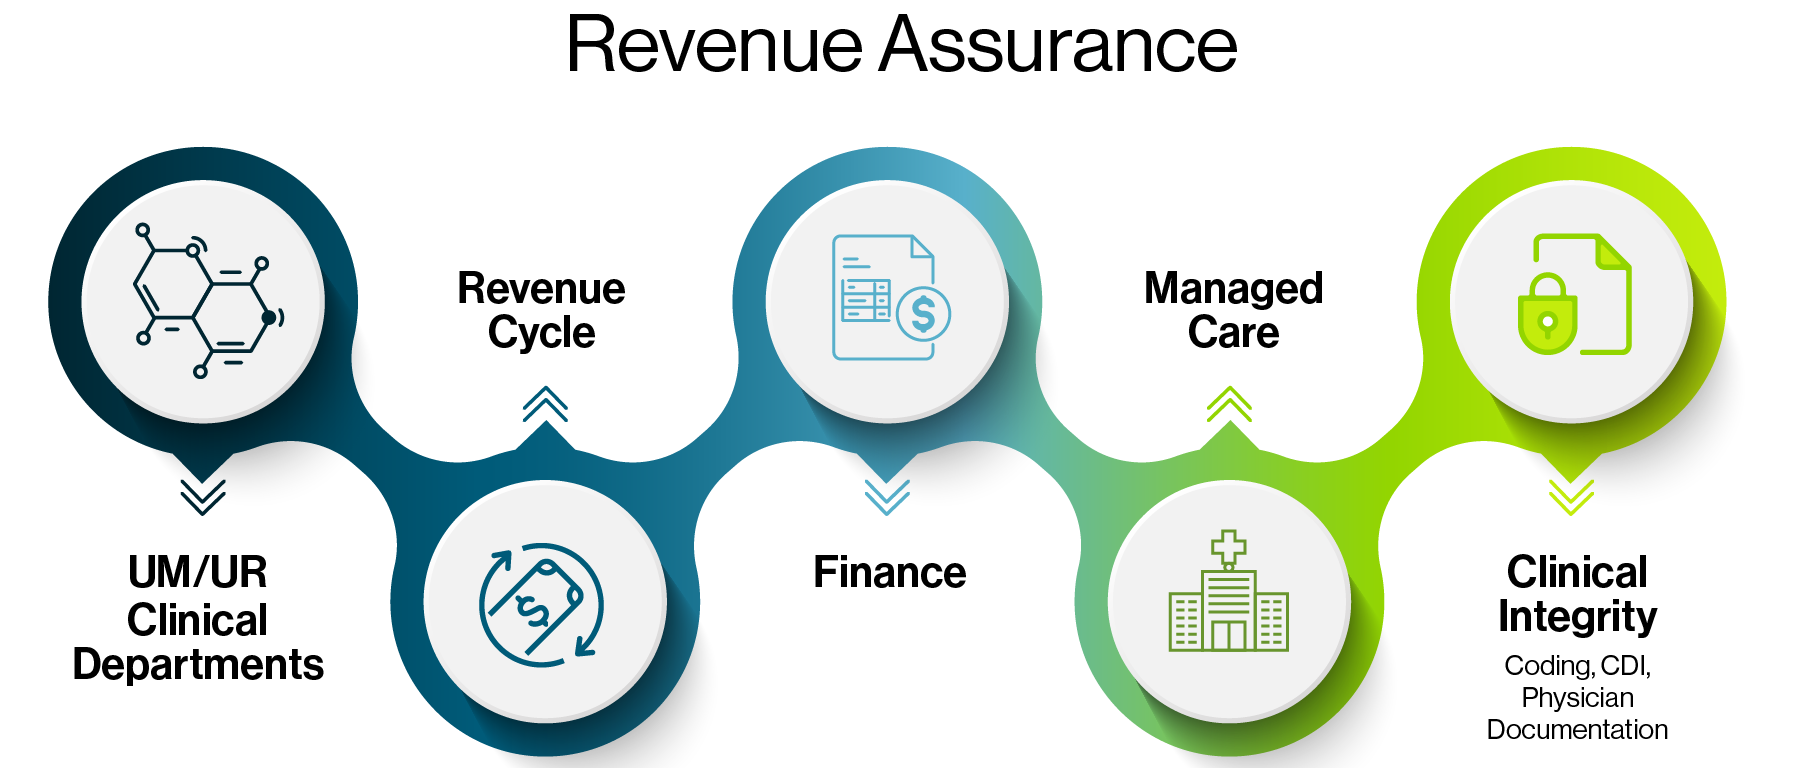 Revenue Assurance 